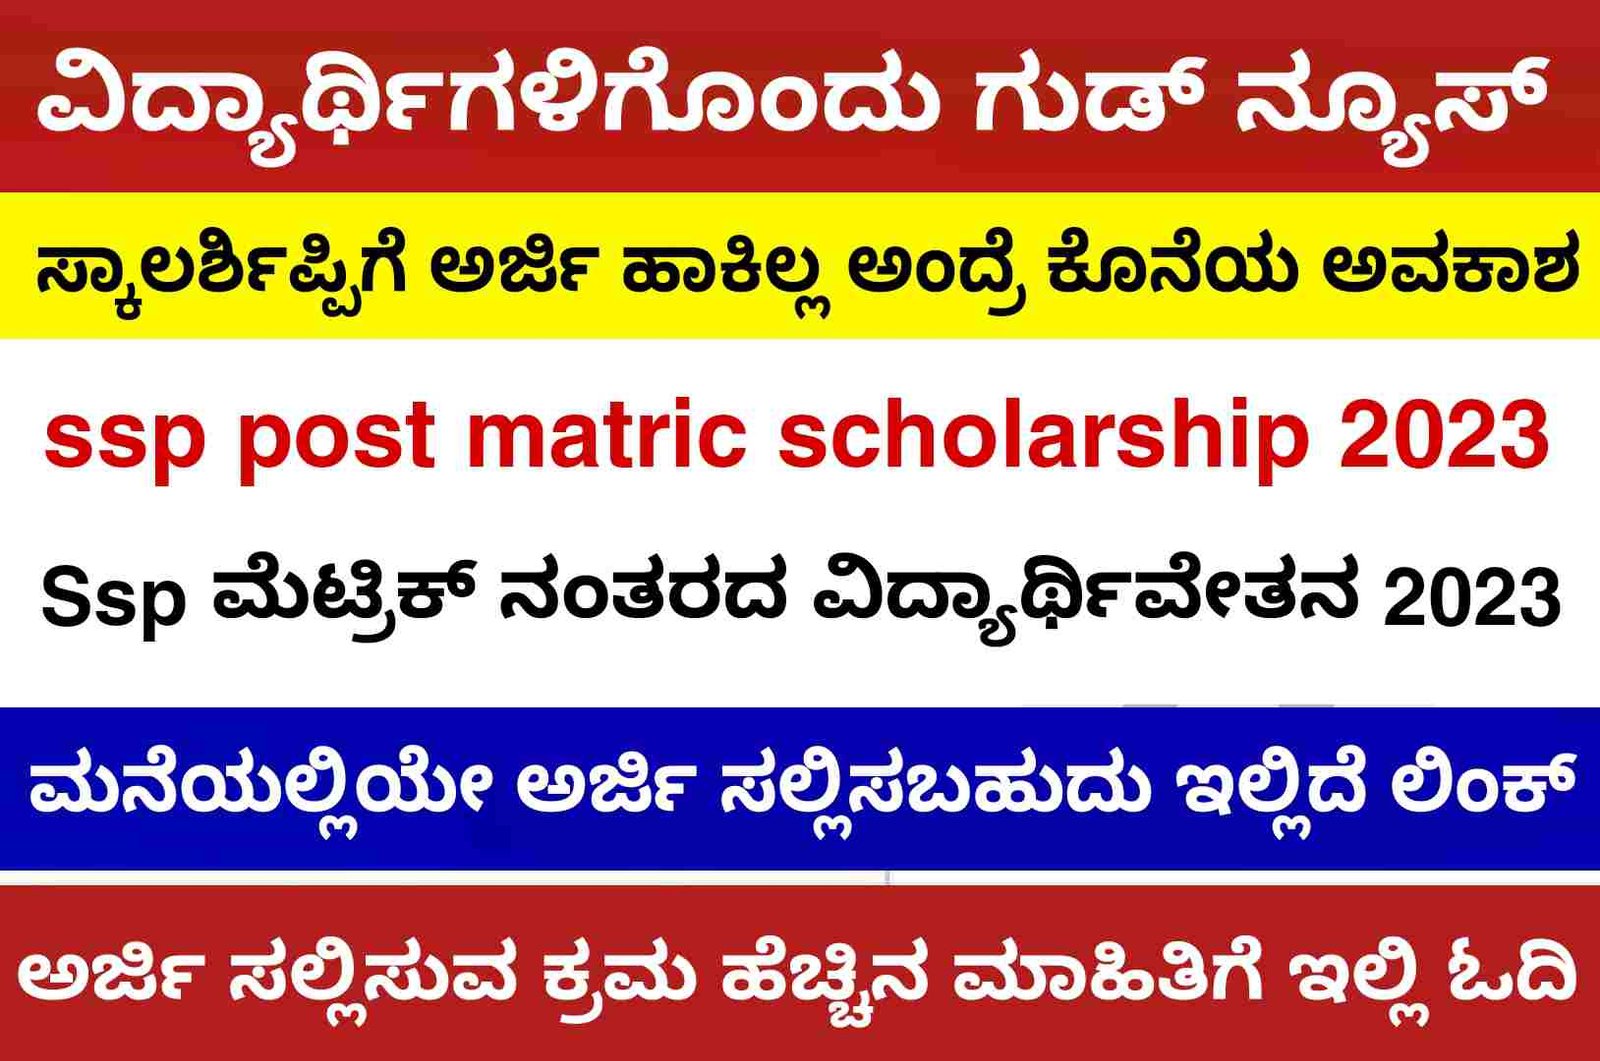 ssp post matric scholarship 2023 - Ssp ಮೆಟ್ರಿಕ್ ನಂತರದ ವಿದ್ಯಾರ್ಥಿವೇತನ 2023